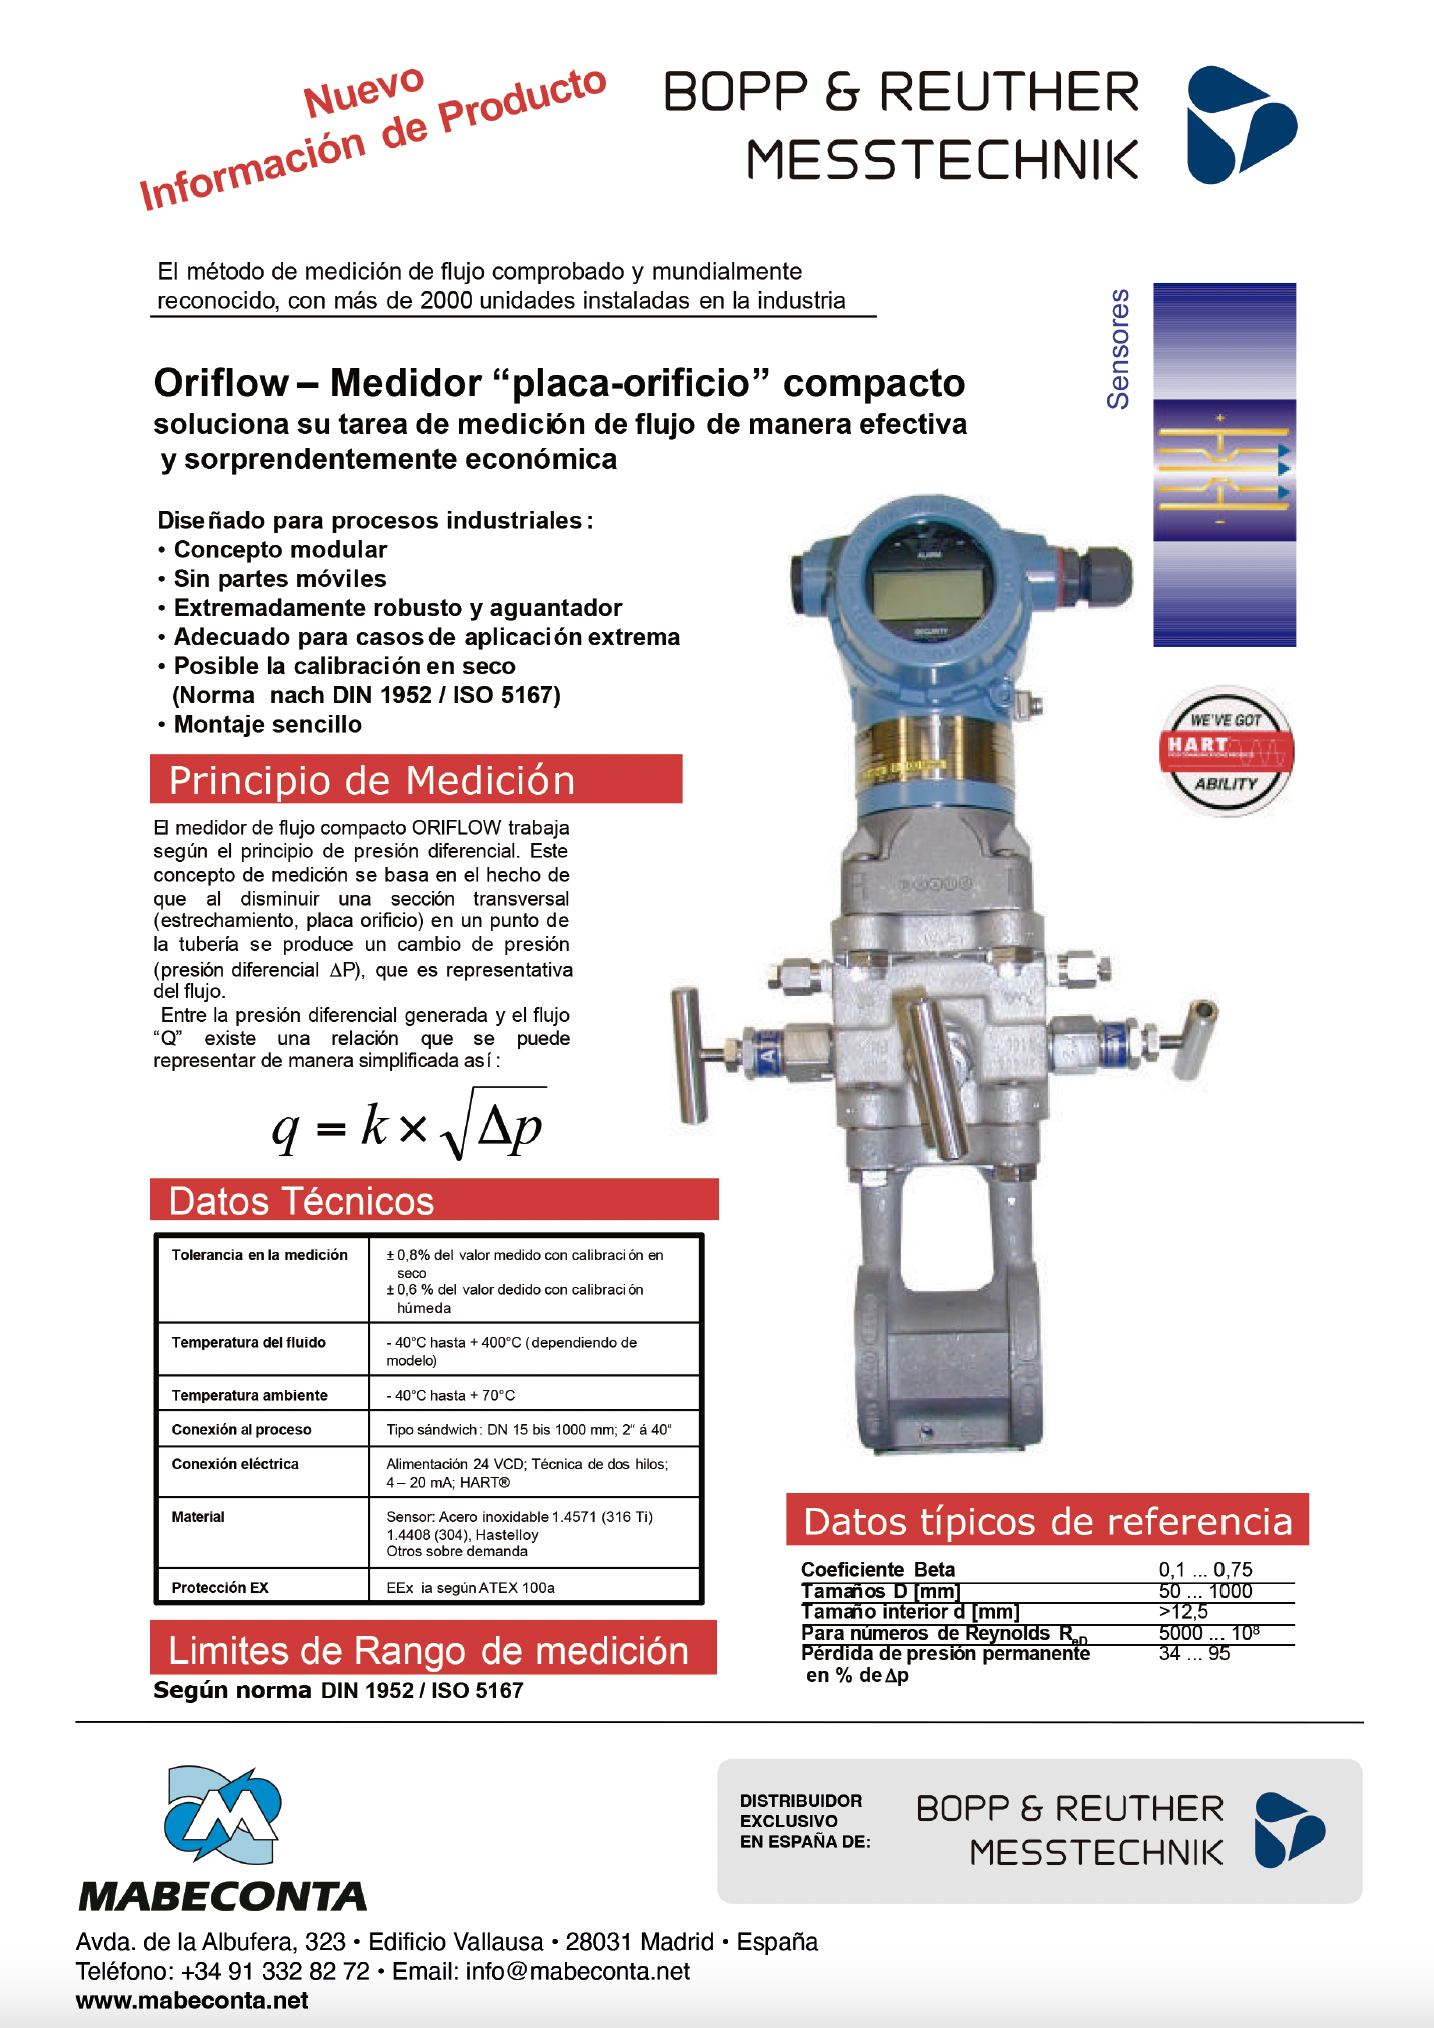 Oriflow - Medidor compacto de Boop&Reuther